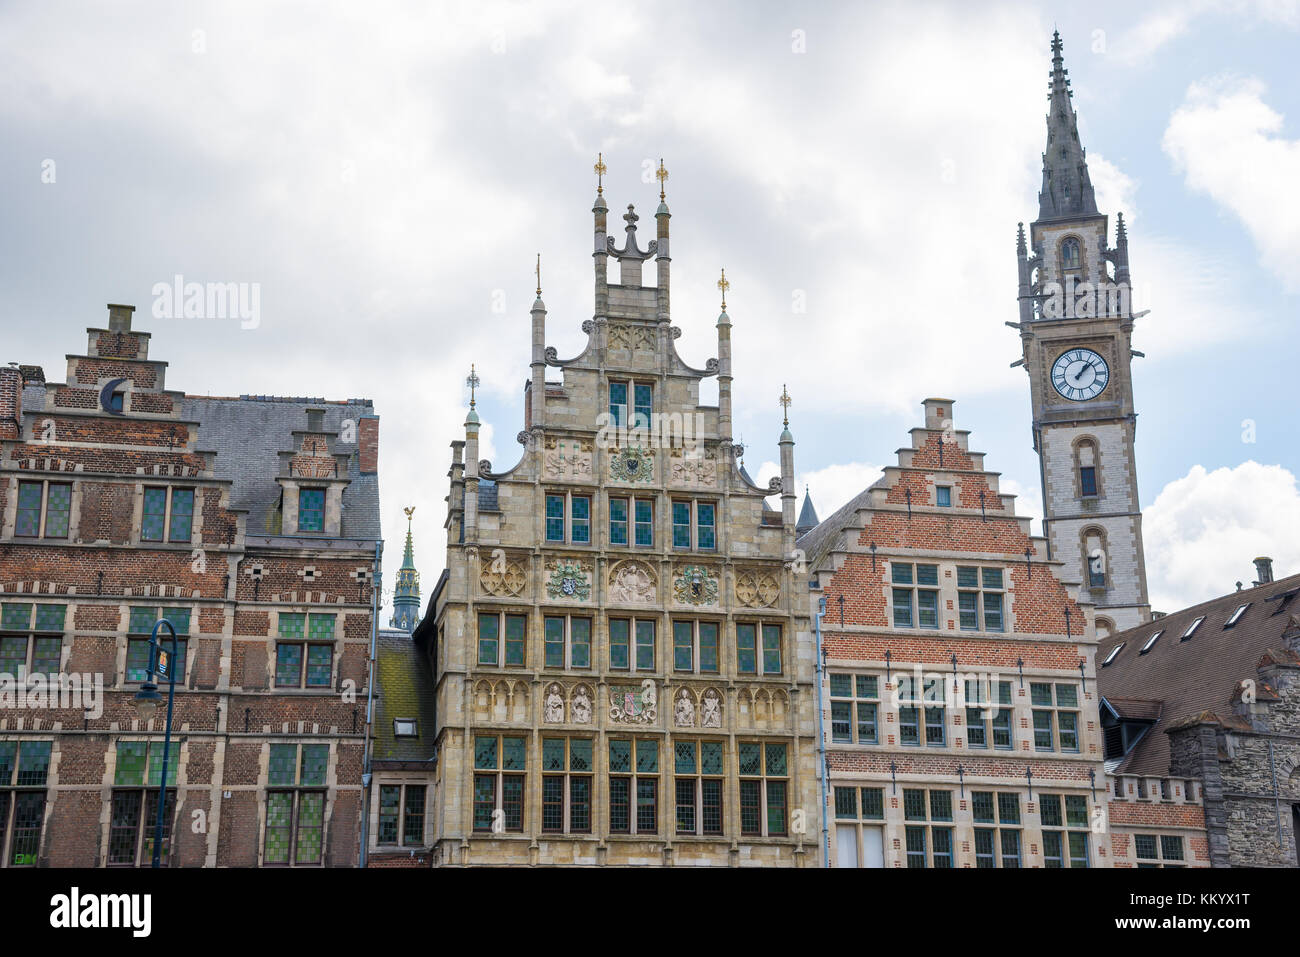 Ghent, Belgium - April 16, 2017: Row of historic colorful buildings in Ghent, Belgium Stock Photo